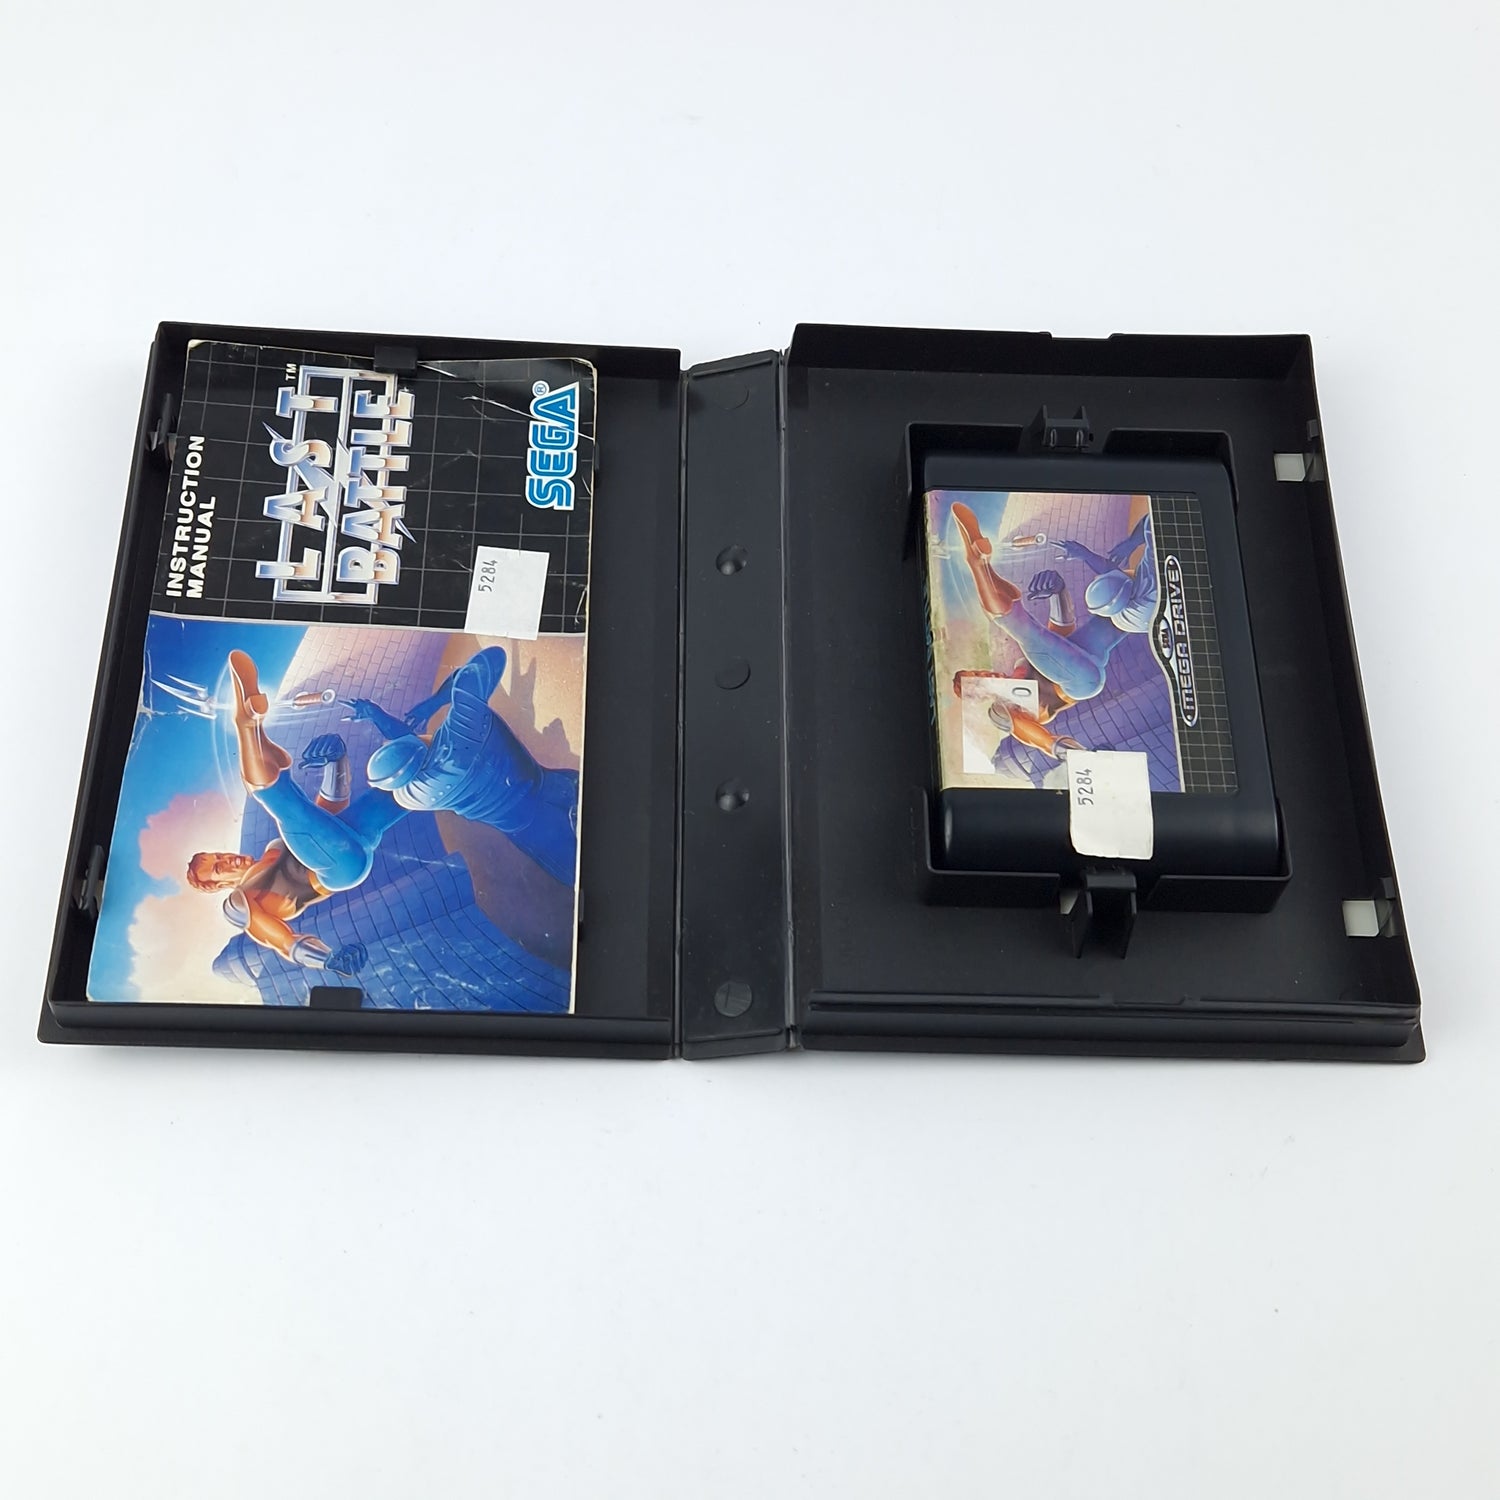 Sega Mega Drive Game: Last Battle - Module Instructions OVP cib / MD Pal Game